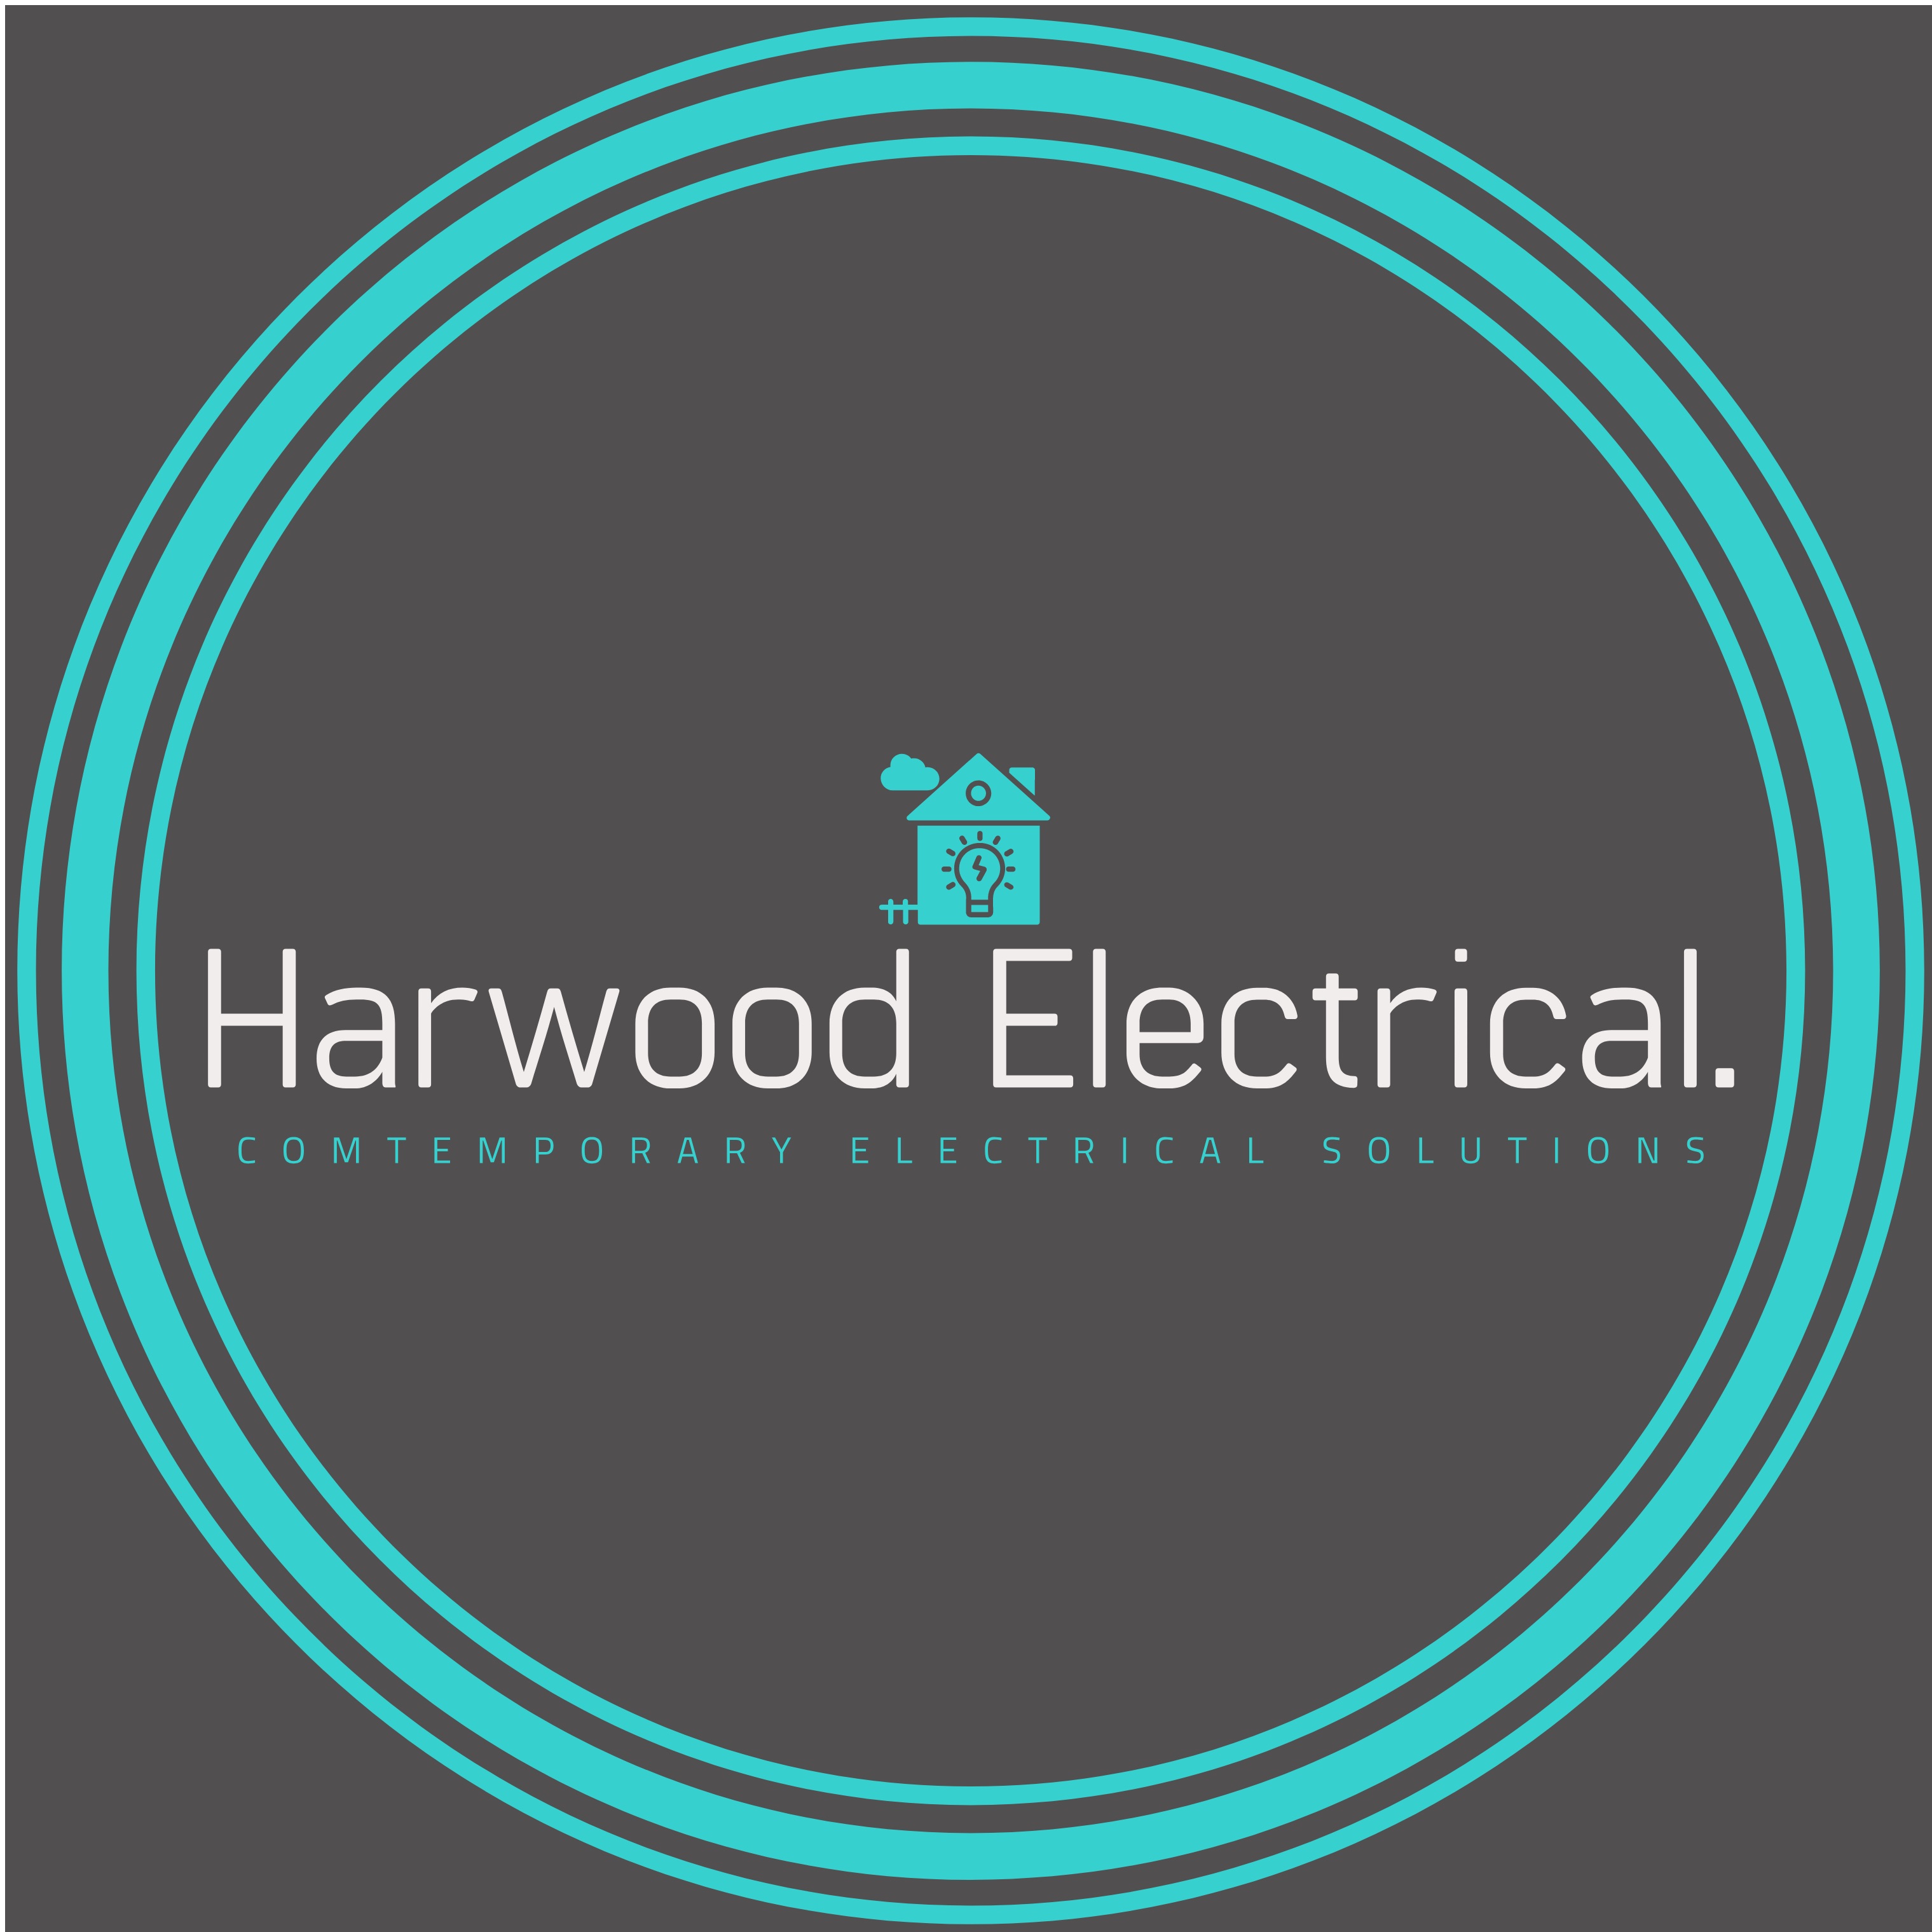 Harwood Electrical